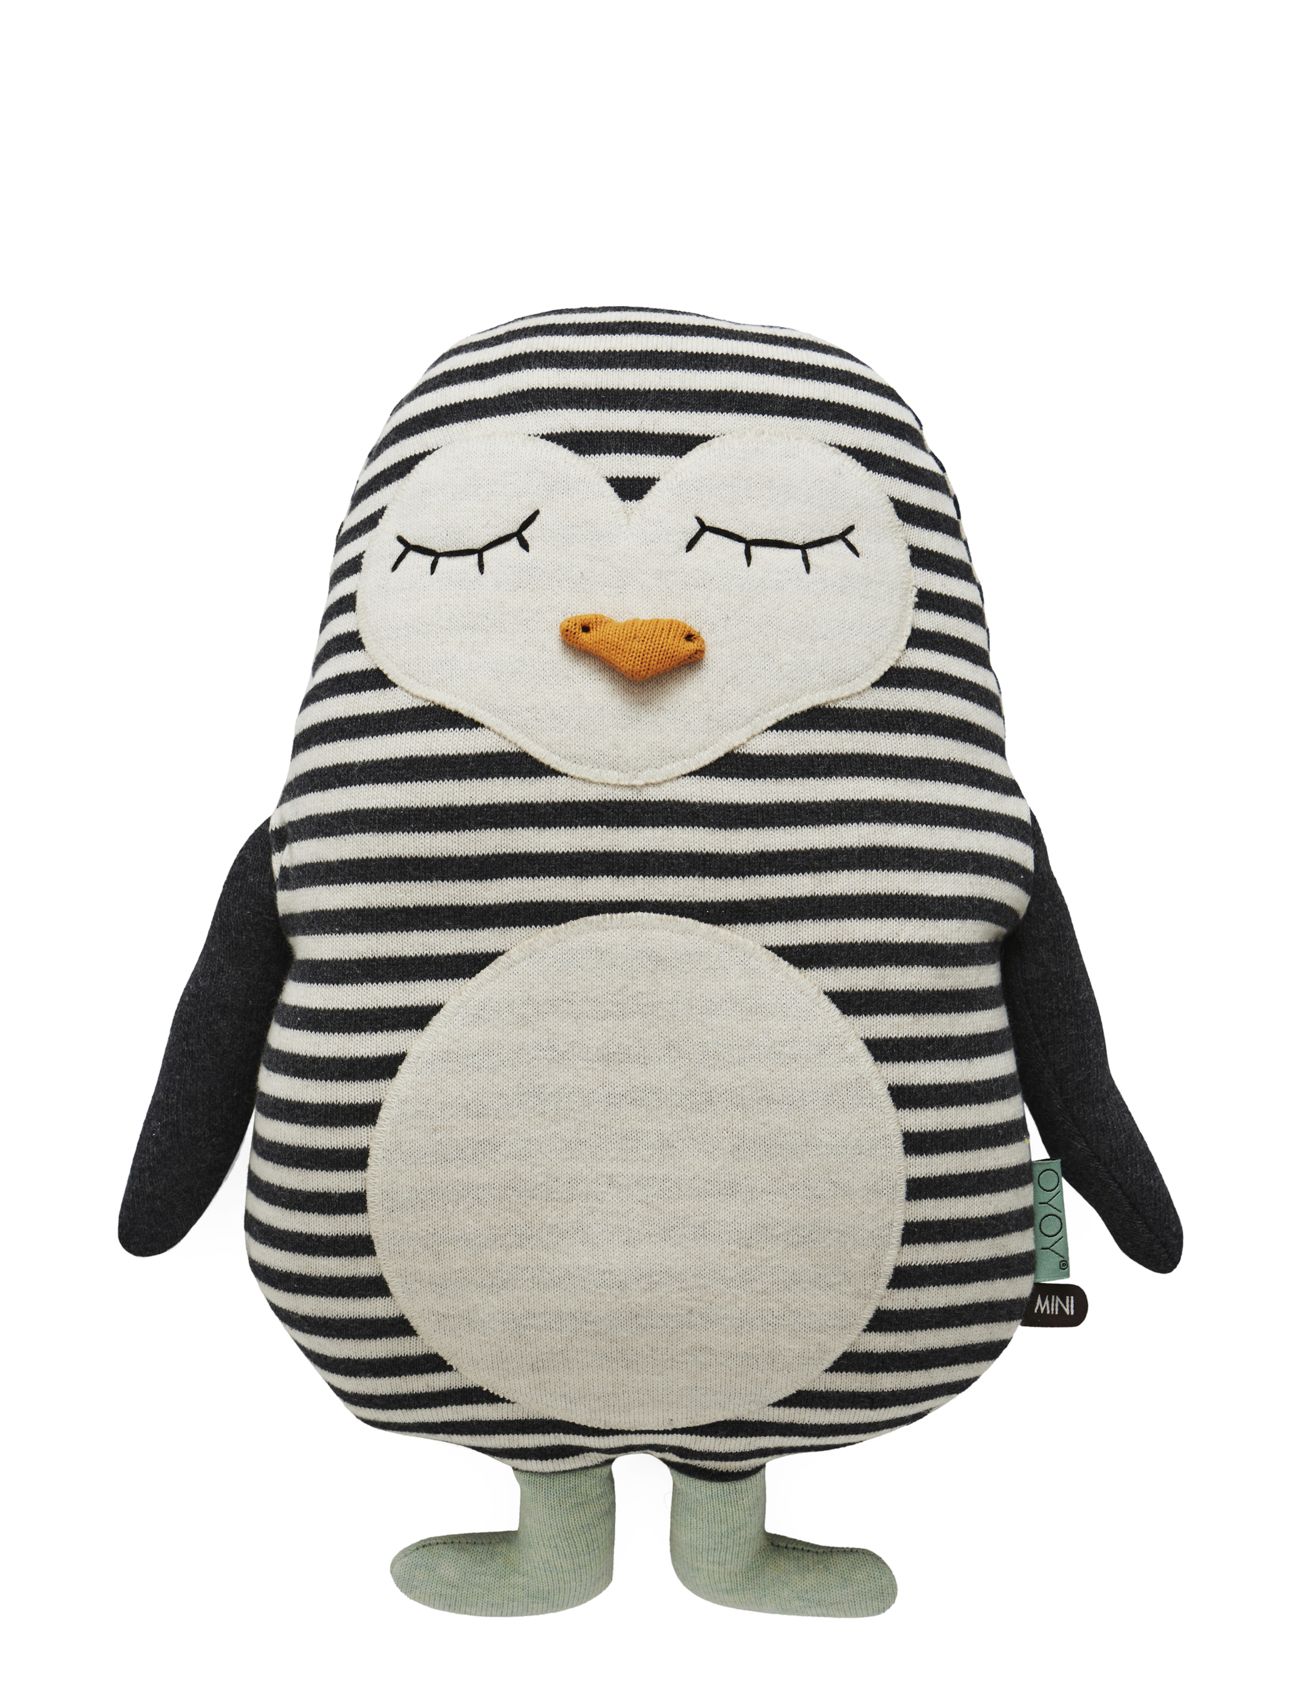 Penguin Pingo Toys Soft Toys Stuffed Animals Black OYOY MINI